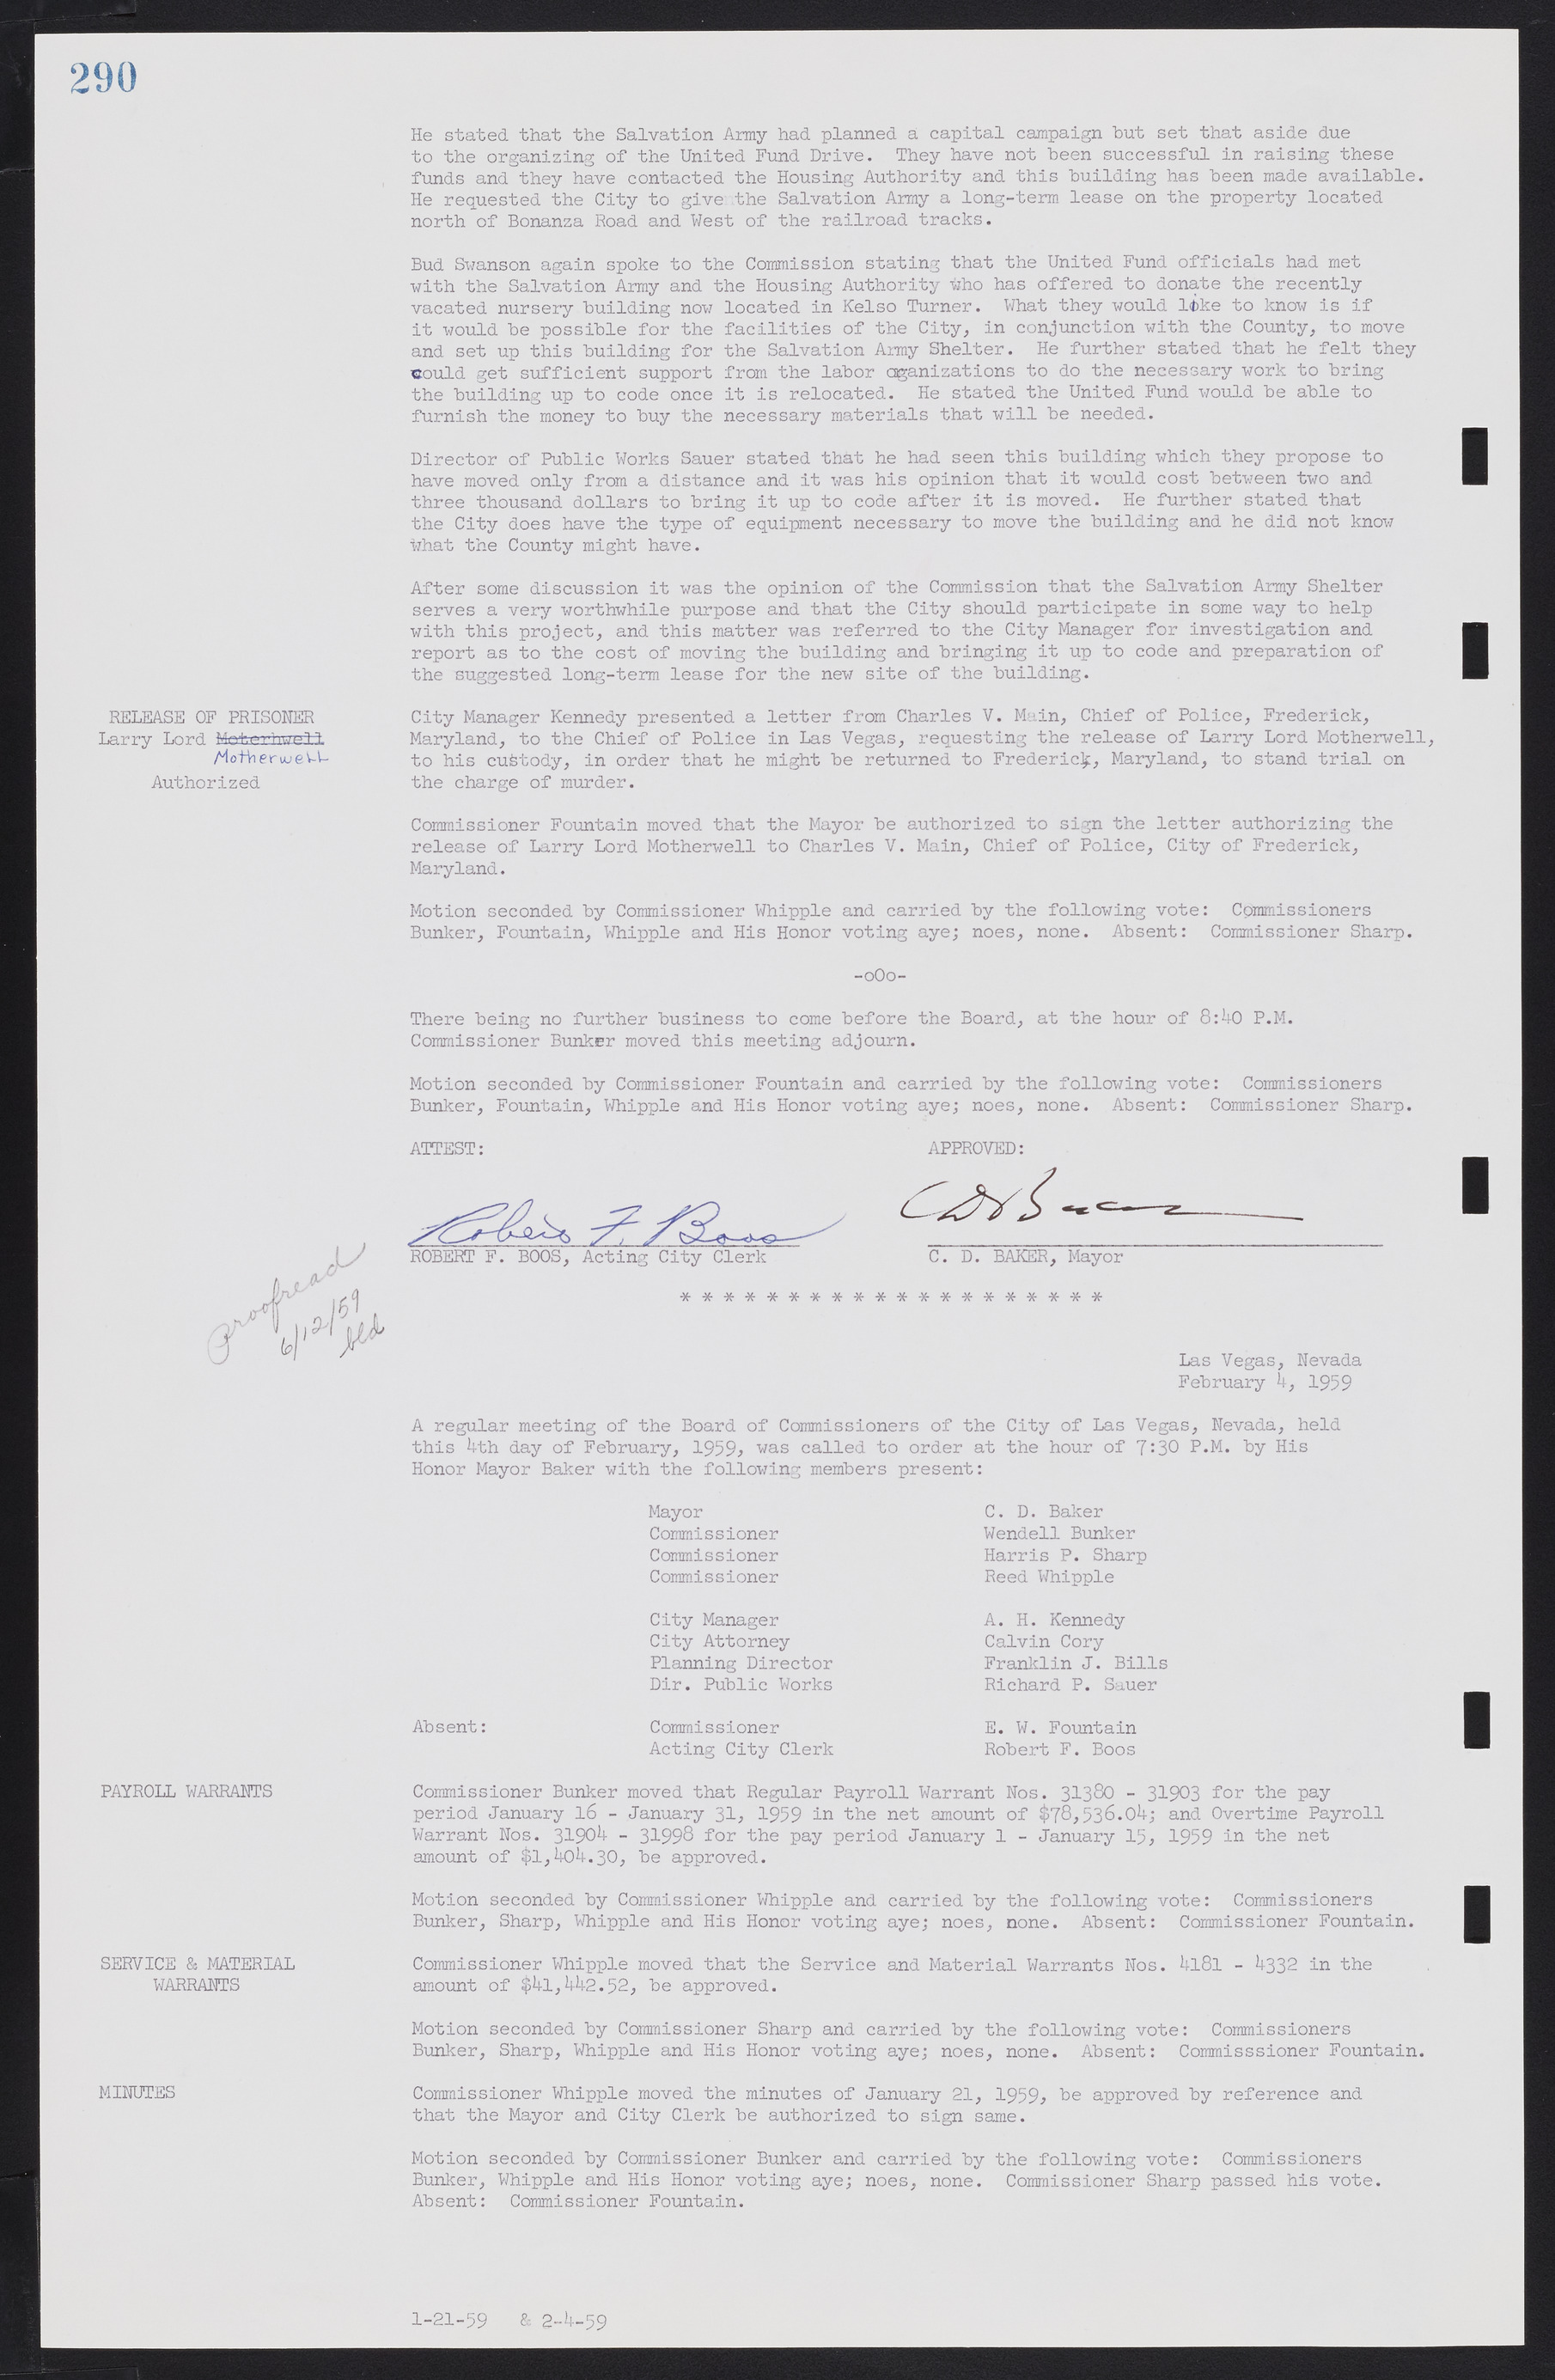 Las Vegas City Commission Minutes, November 20, 1957 to December 2, 1959, lvc000011-298